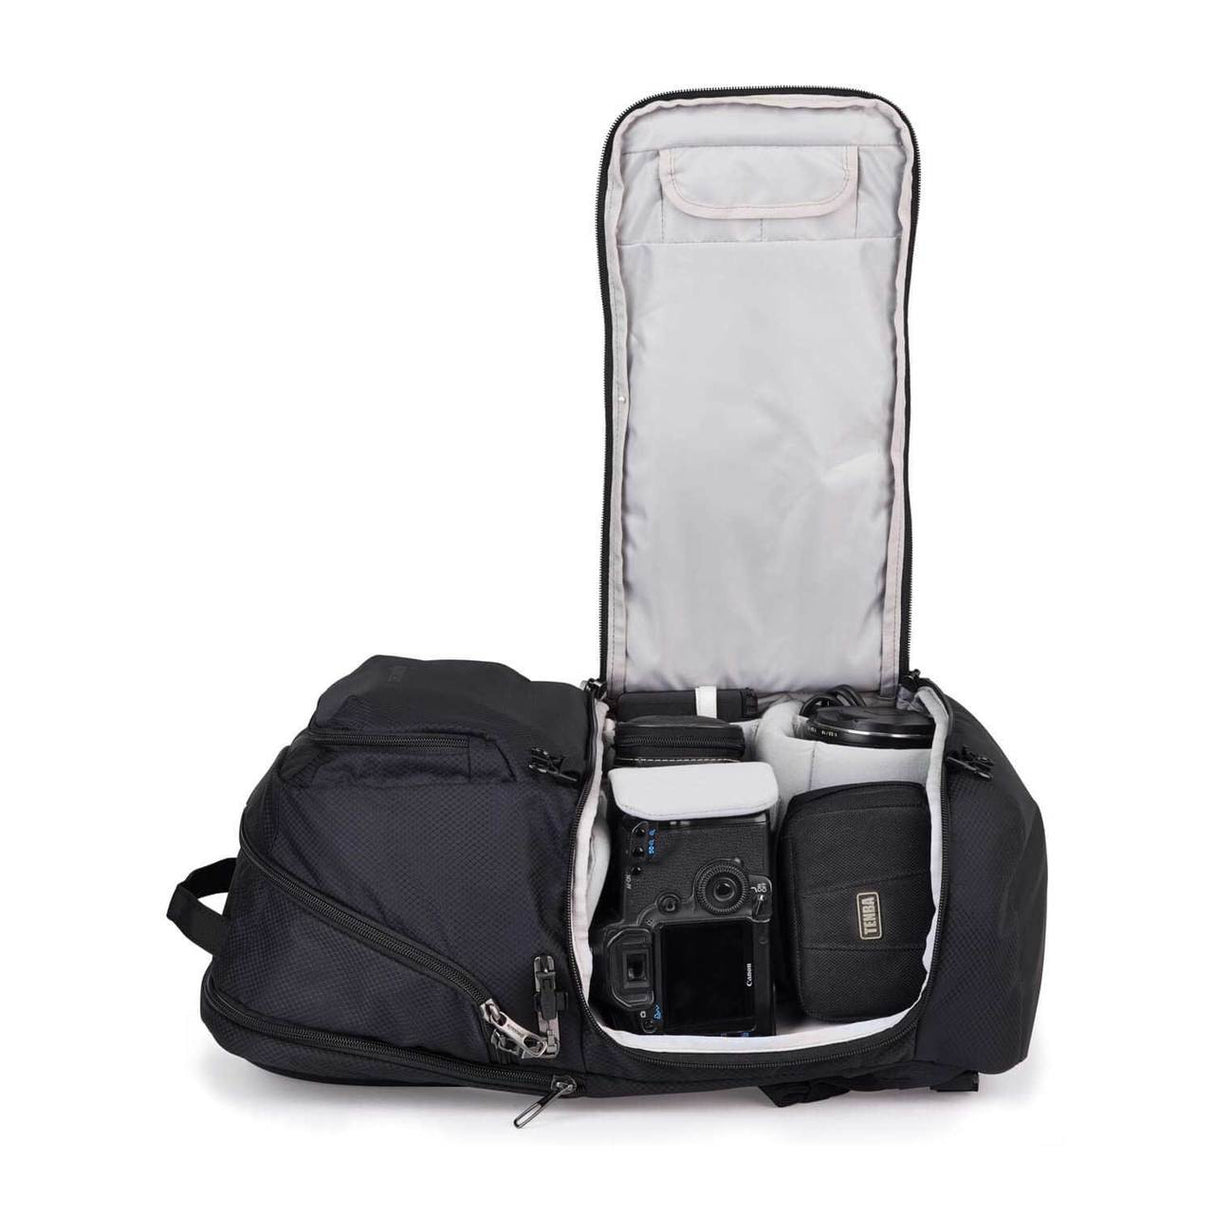 Pacsafe Camsafe X25 anti-theft camera backpack